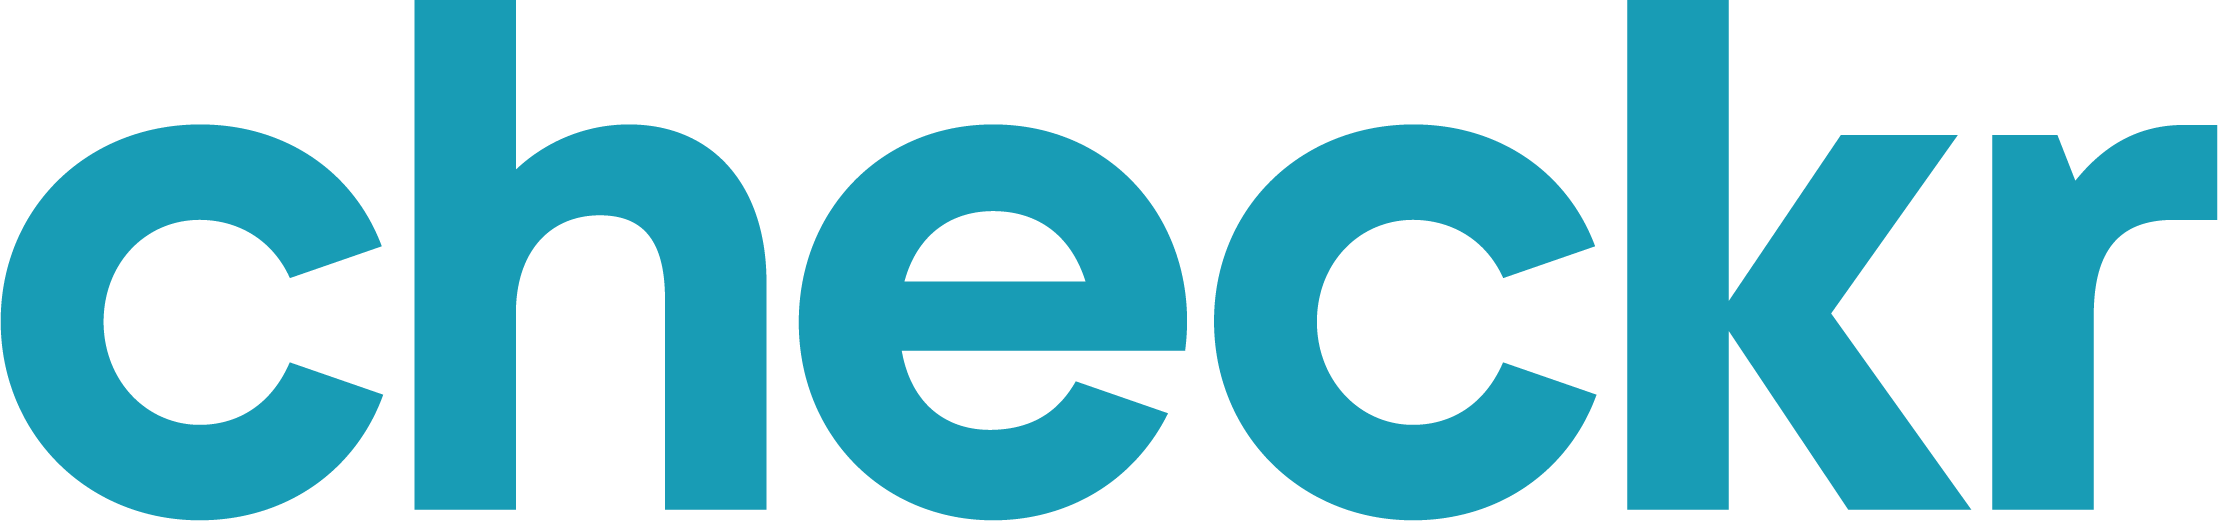 Checkr Inc. logo